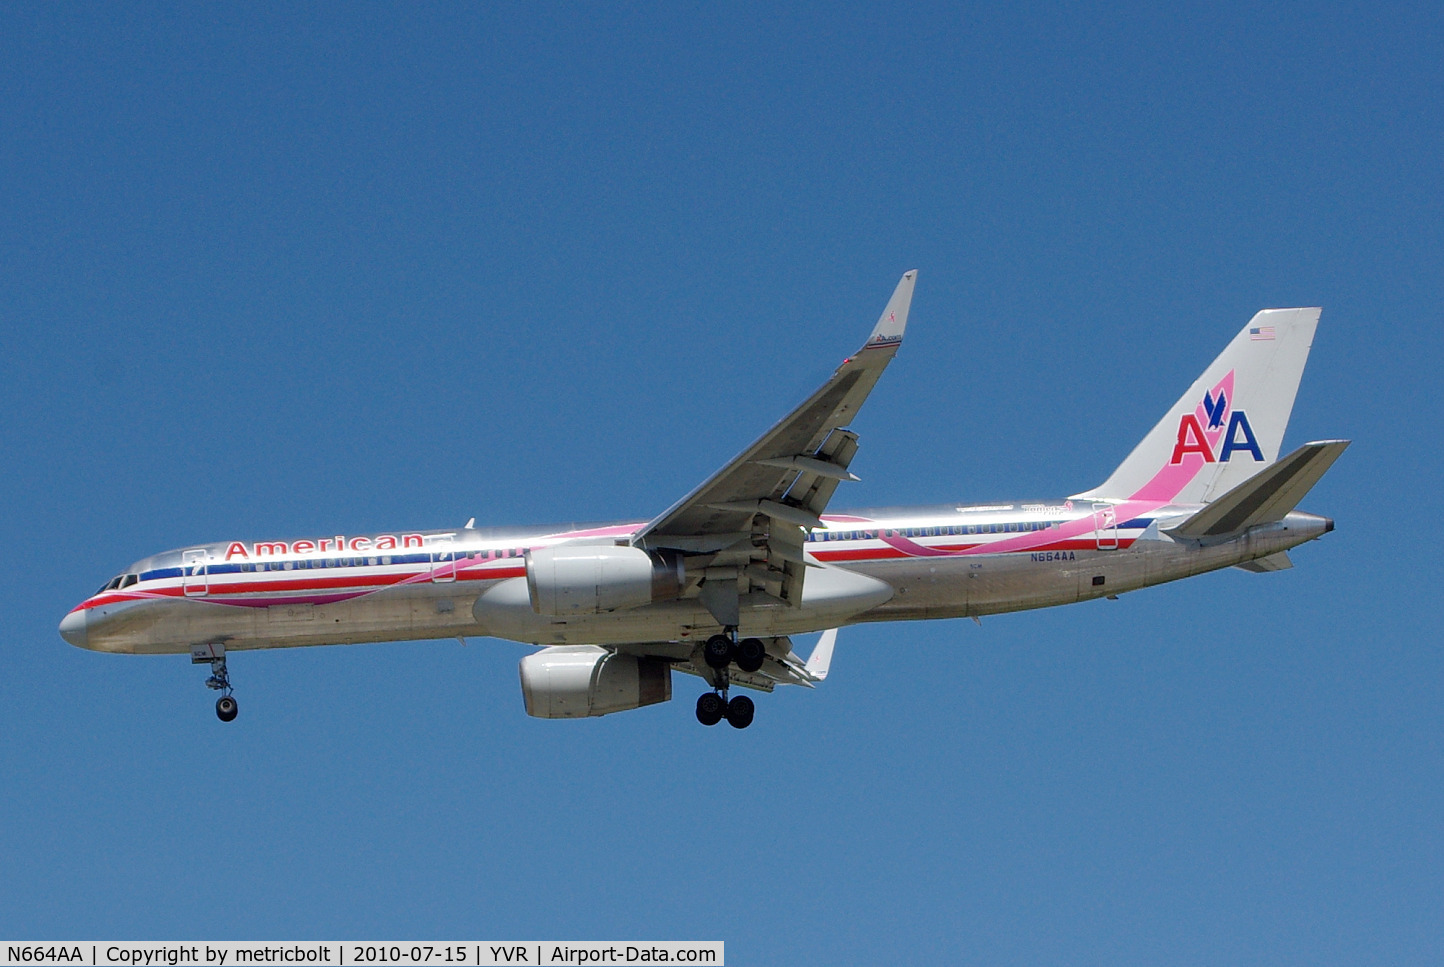 N664AA, 1992 Boeing 757-223 C/N 25298, Landing at YVR, Breast Cancer Awareness ribbon